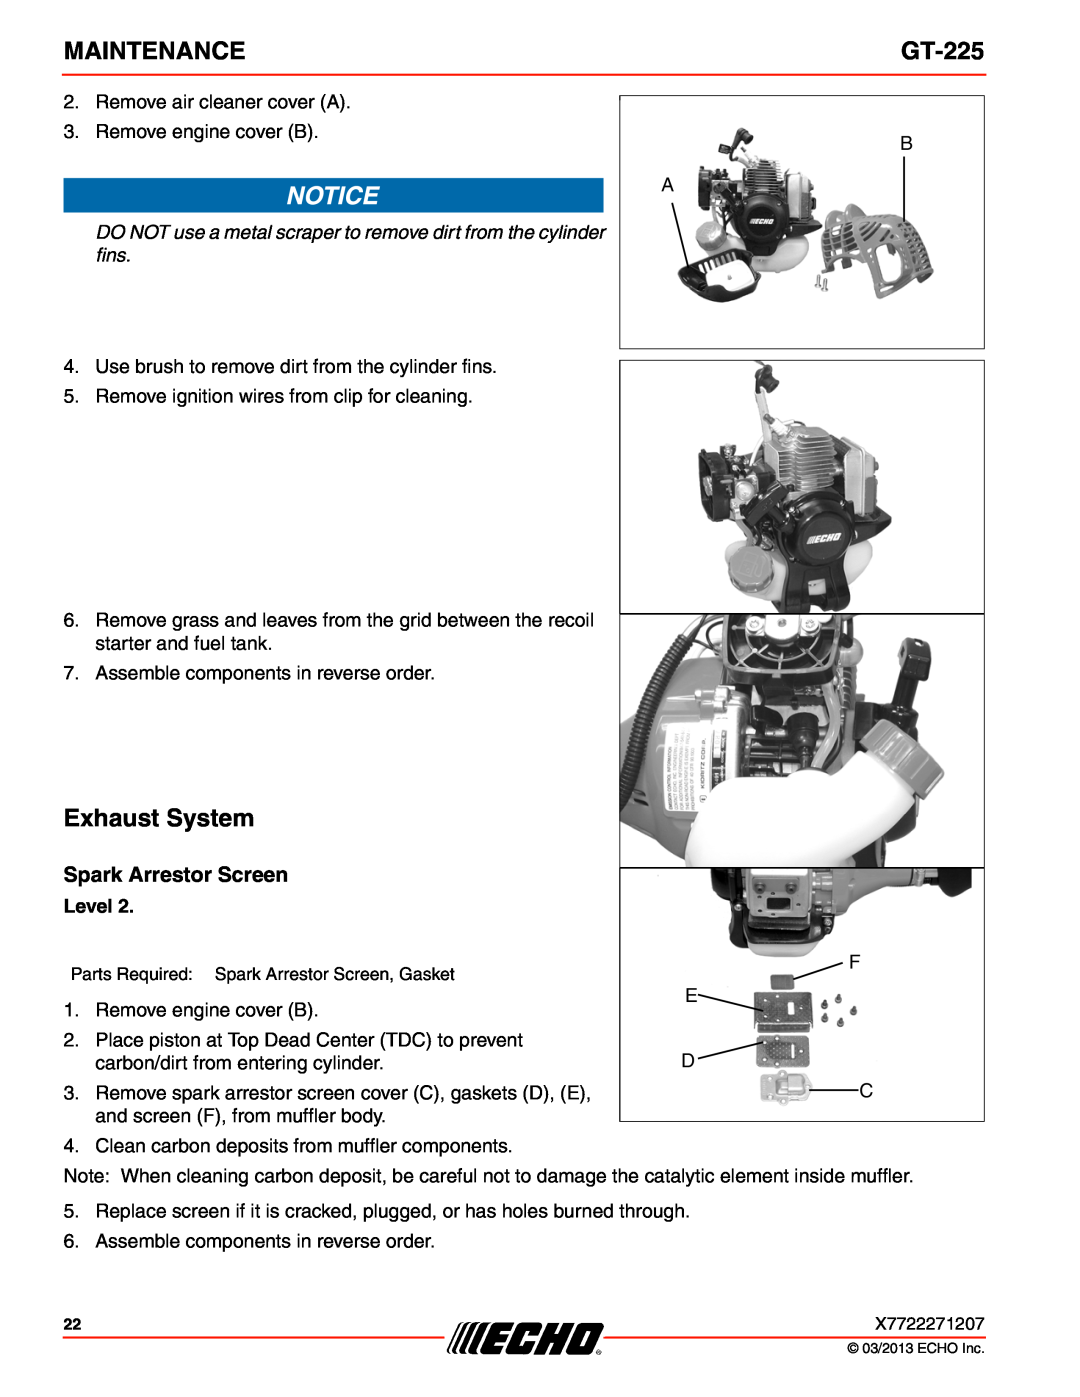 Echo GT-225 specifications Exhaust System, Spark Arrestor Screen, Maintenance, Level 